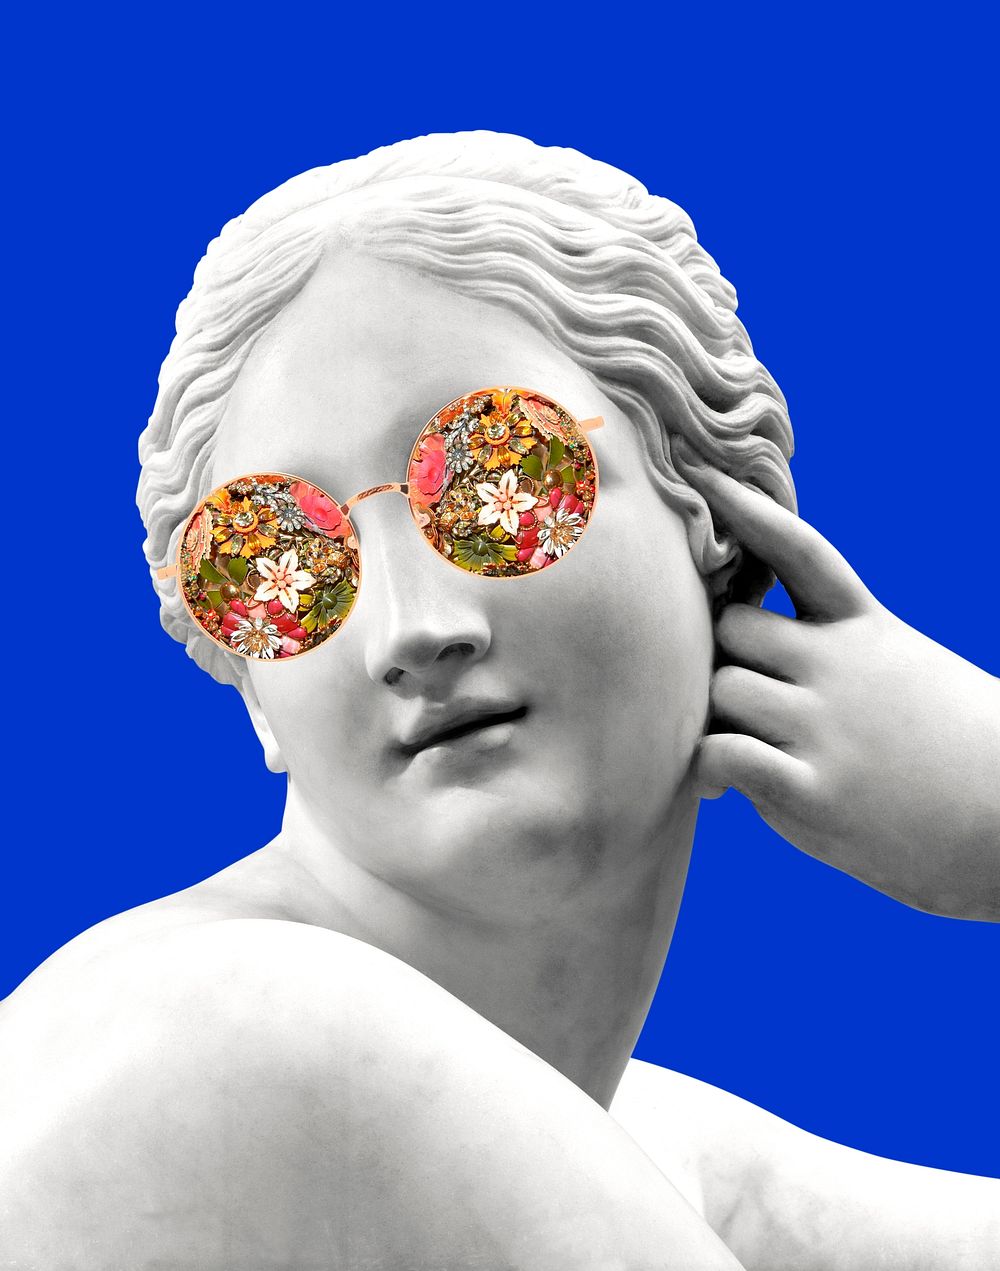 Greek goddess sculpture wearing floral sunglasses, aesthetic photo